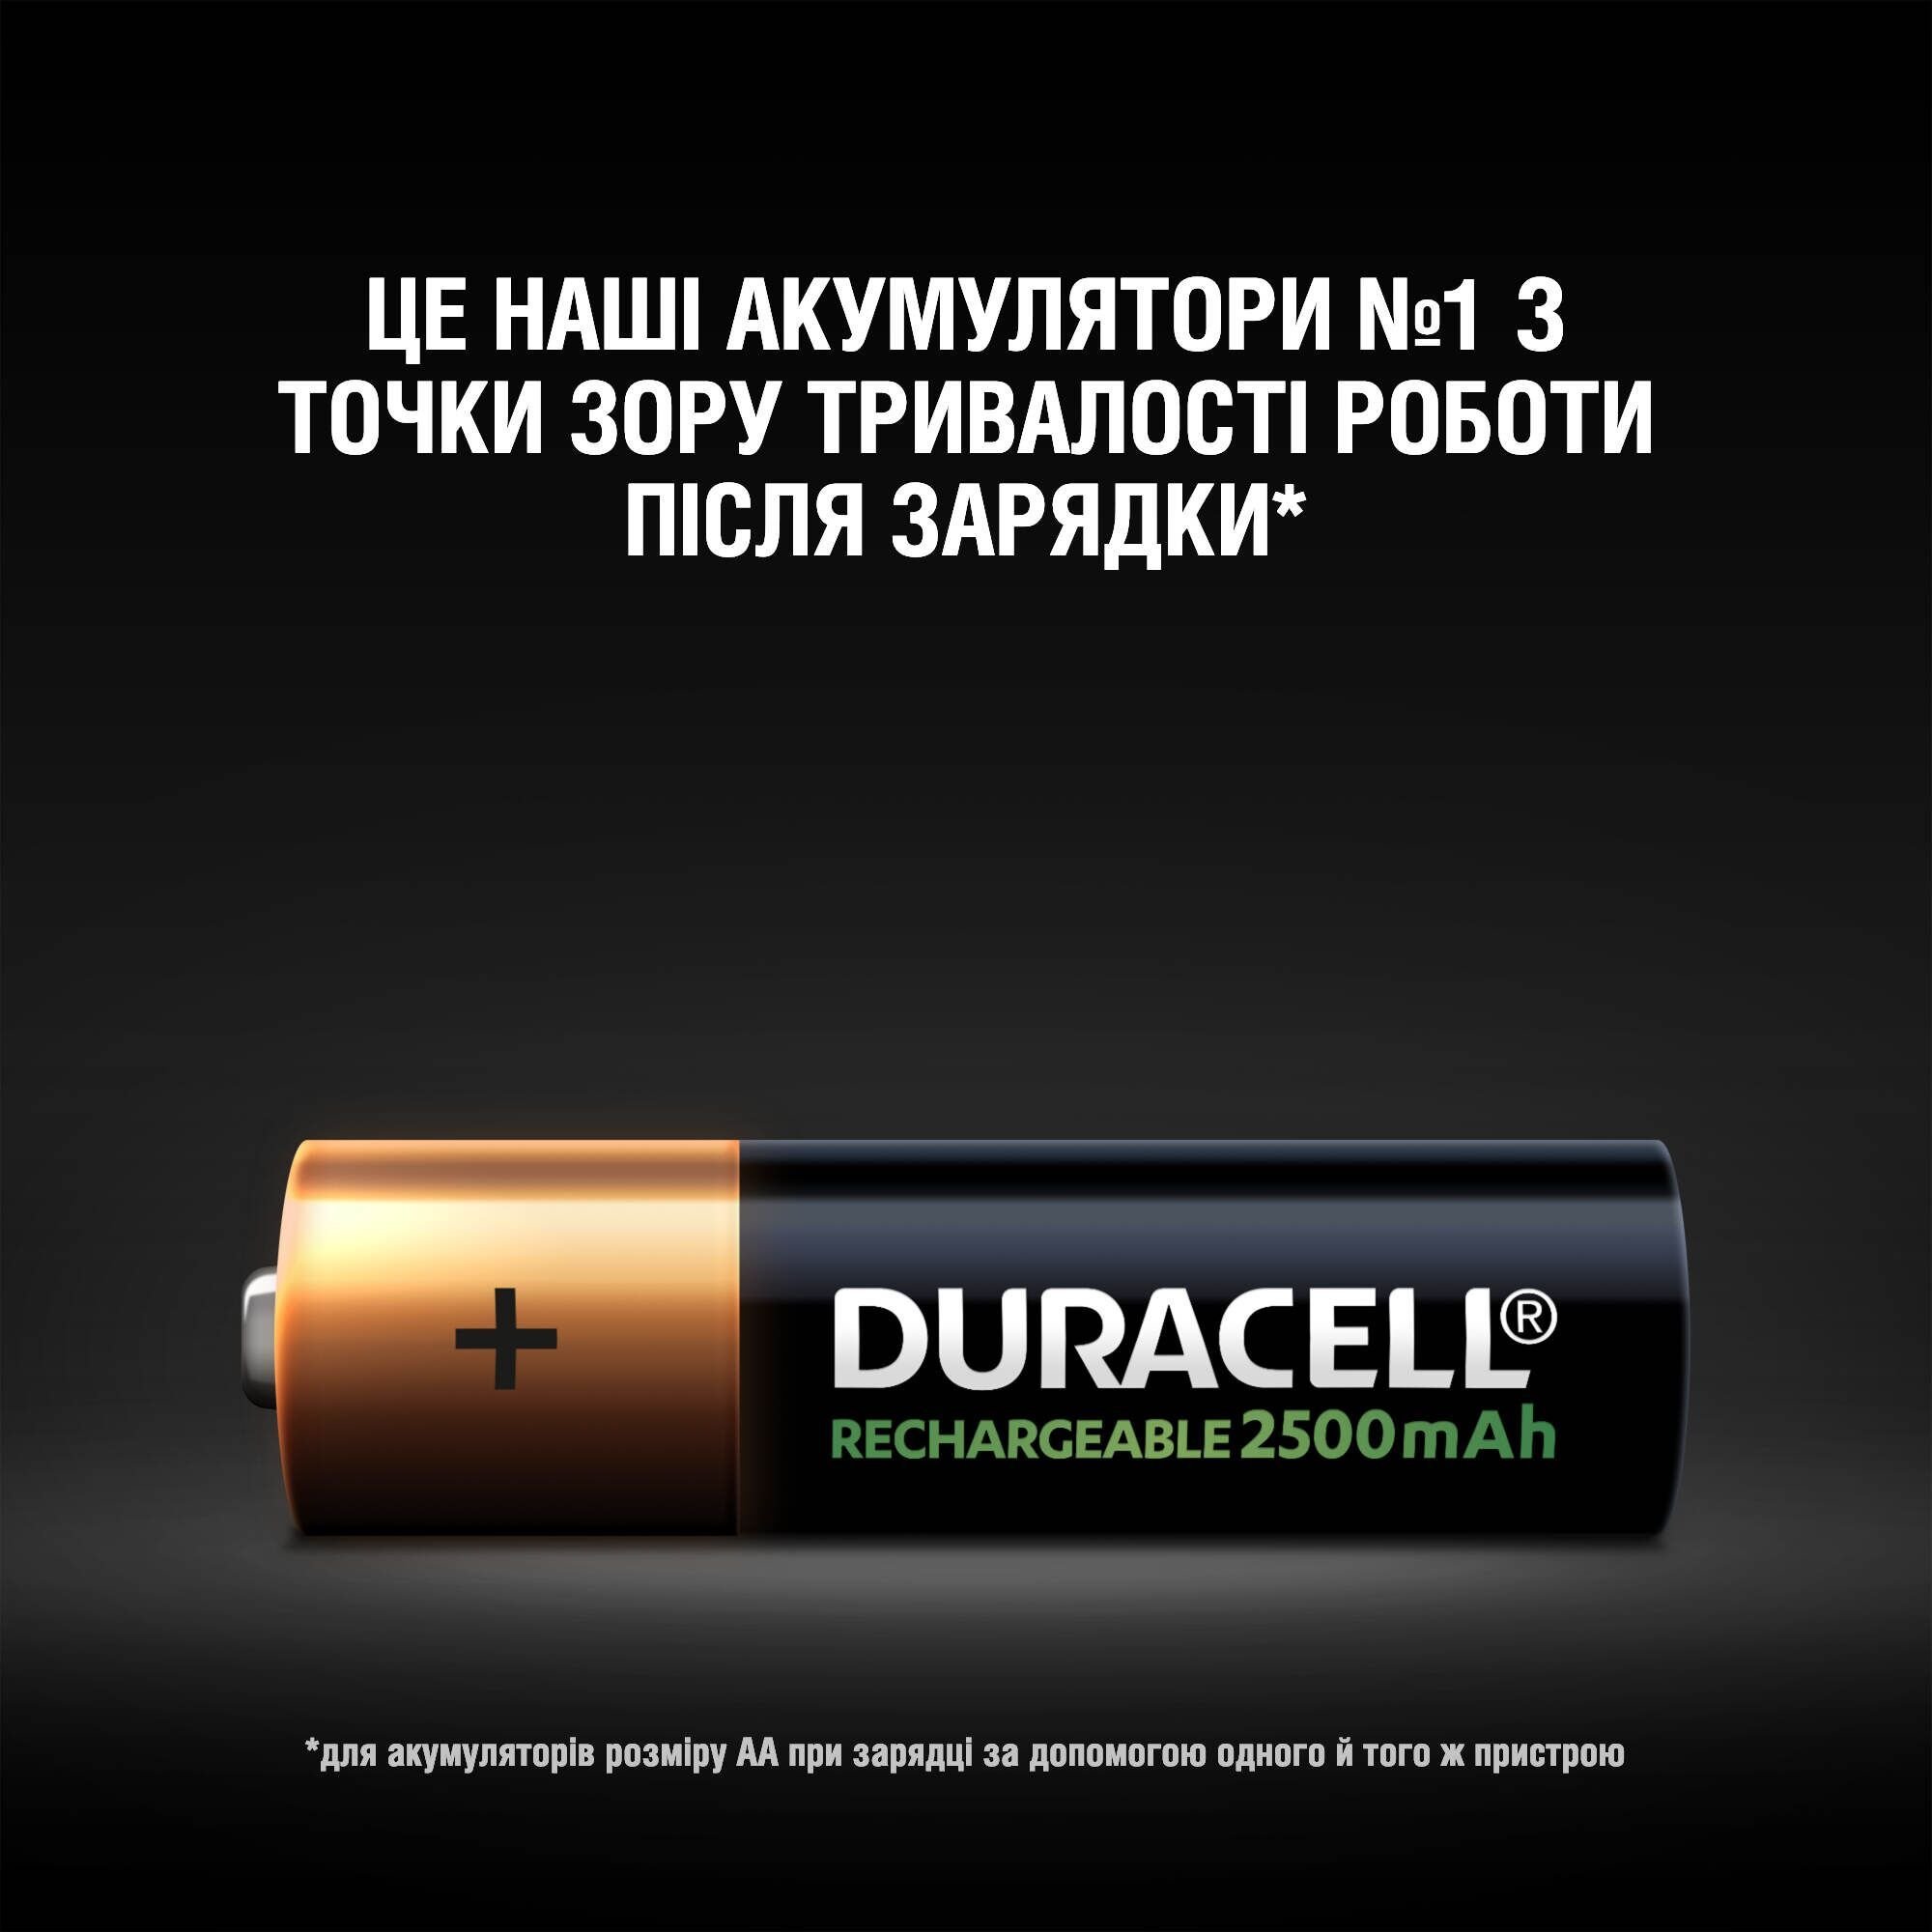 Аккумуляторы Duracell Rechargeable AA 2500 mAh HR6/DC1500, 4 шт. (5005001) - фото 5